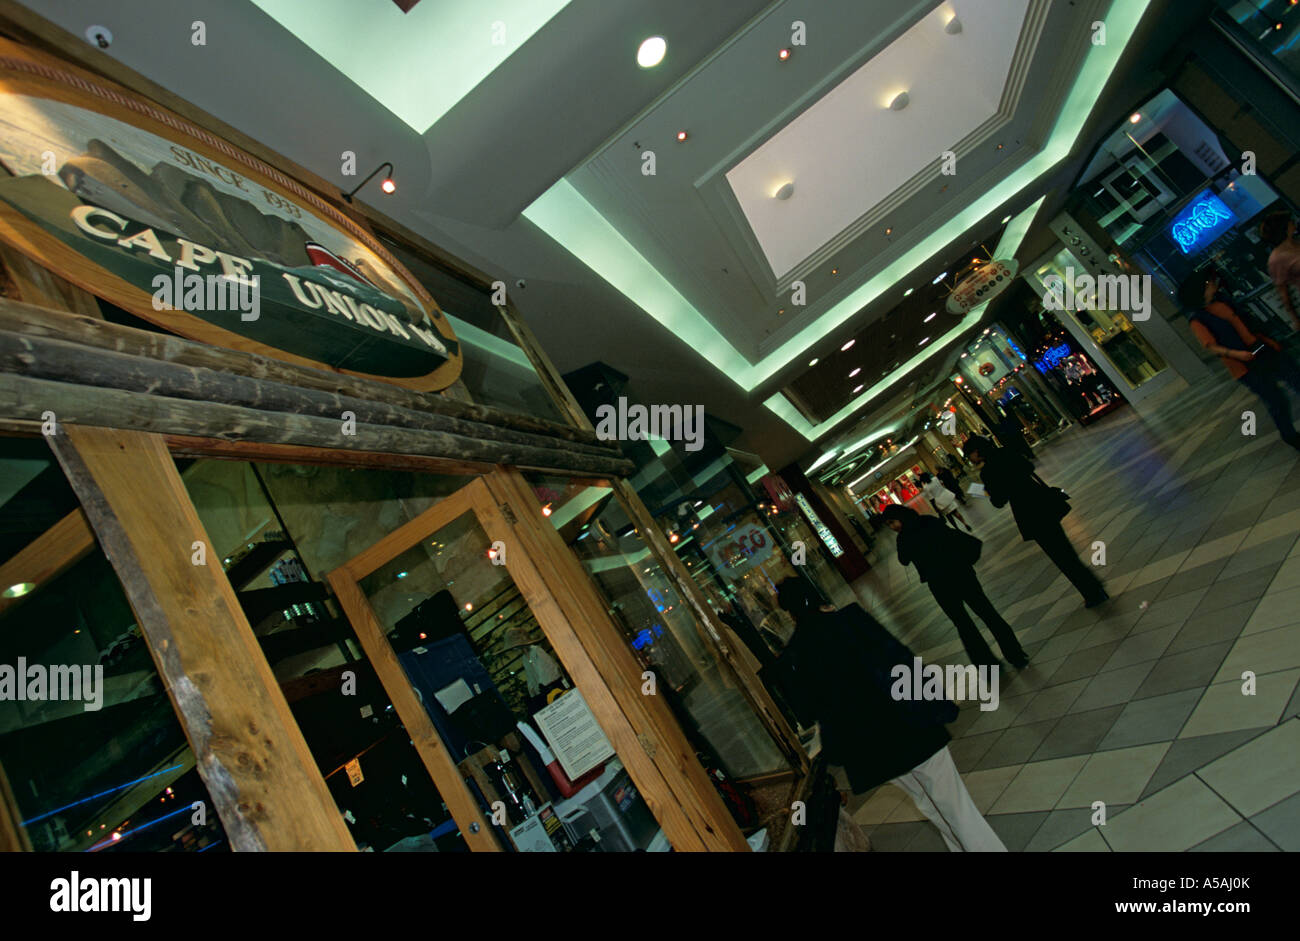 A shopping mall in Sandton city Johannesburg Stock Photo